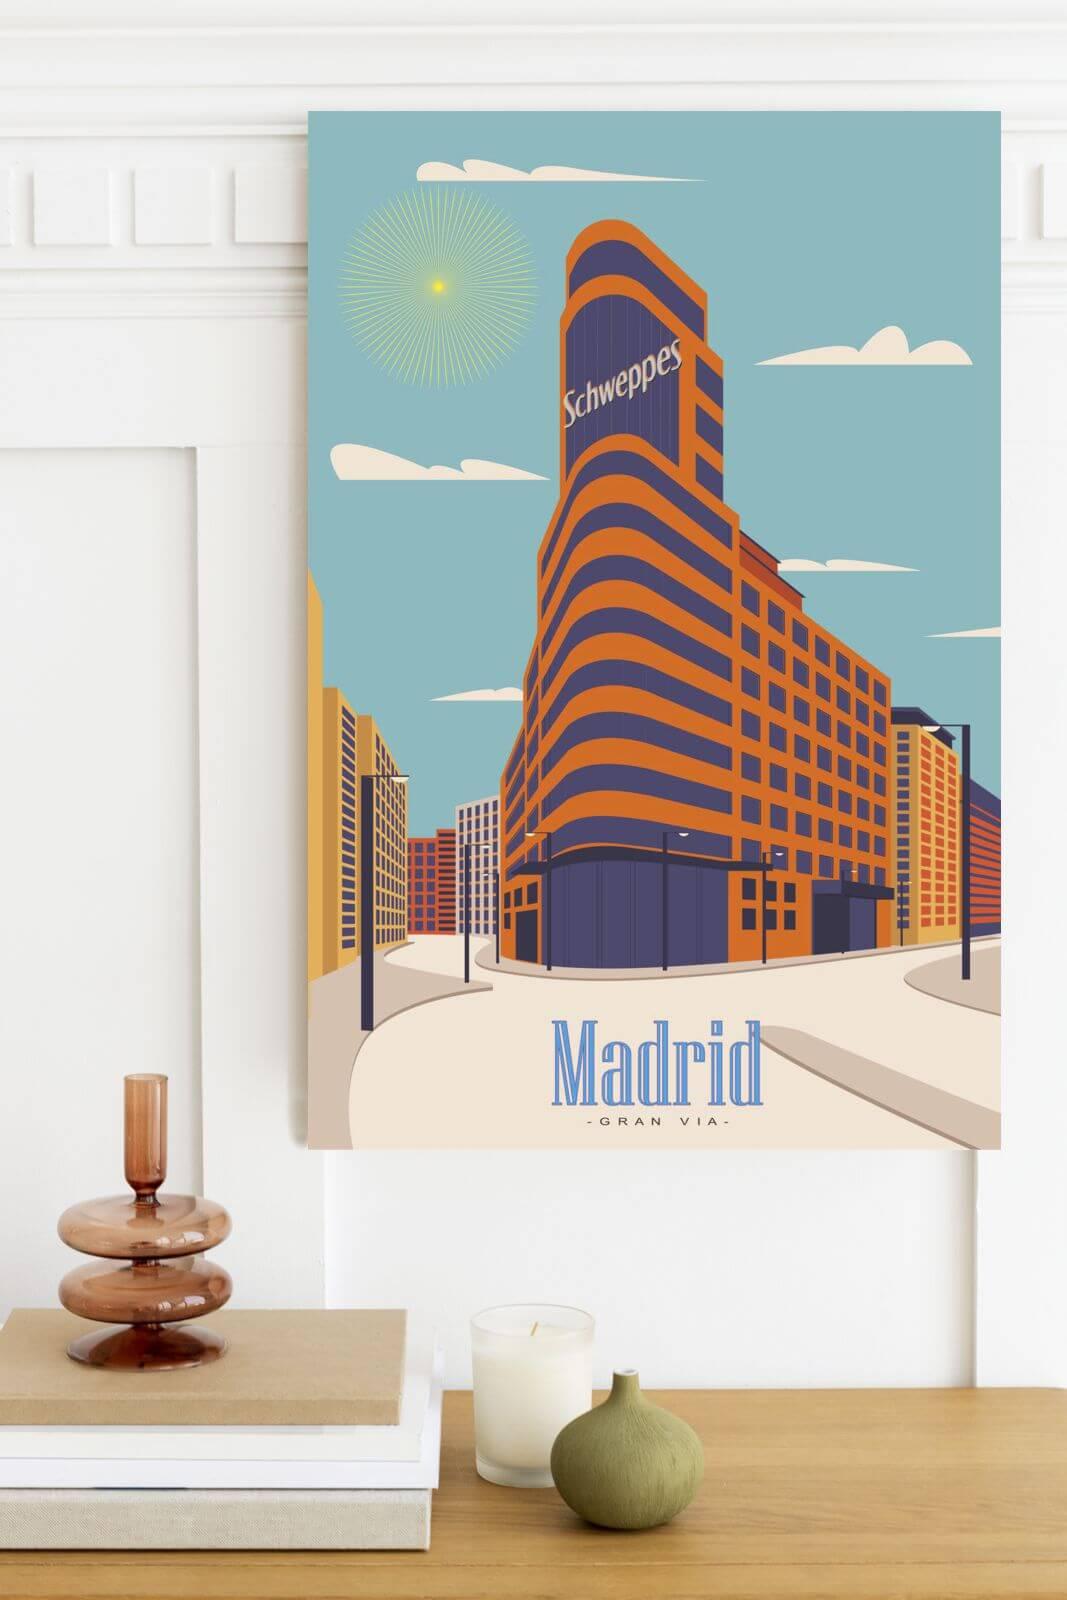 Cuadro de Madrid sobre pared blanca.jpg